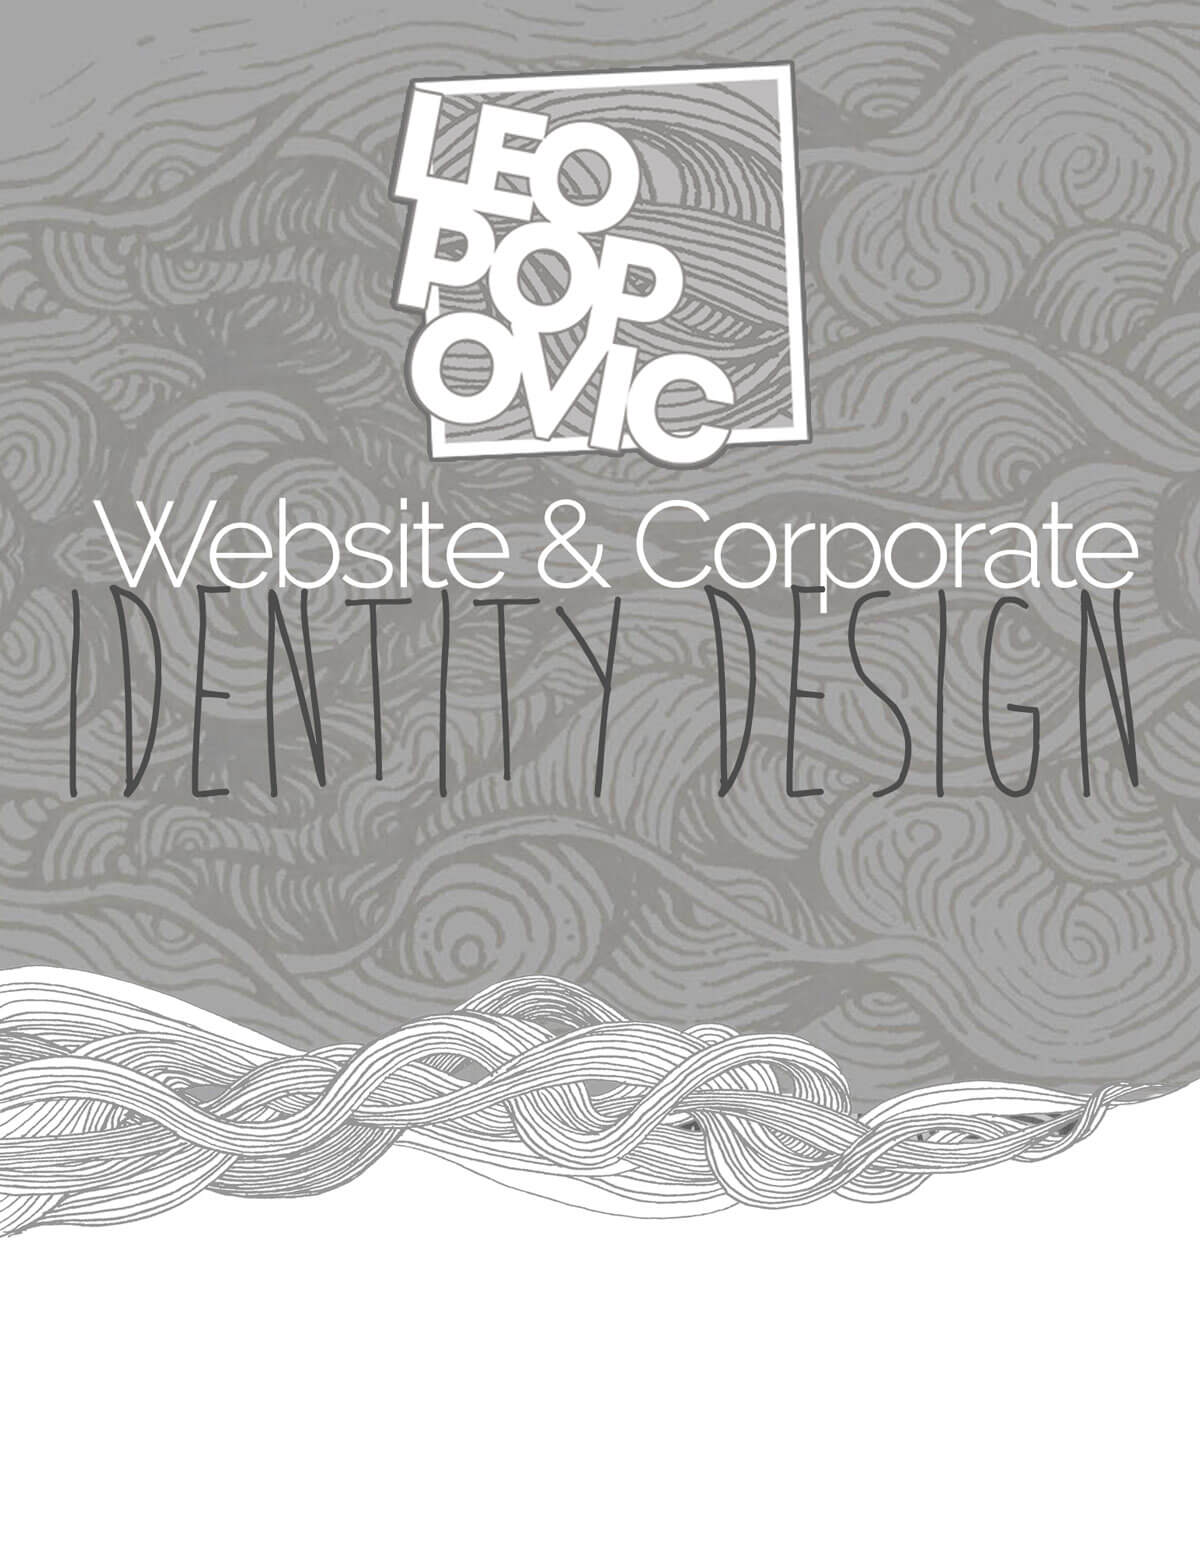 Website & Corporate Identity Design